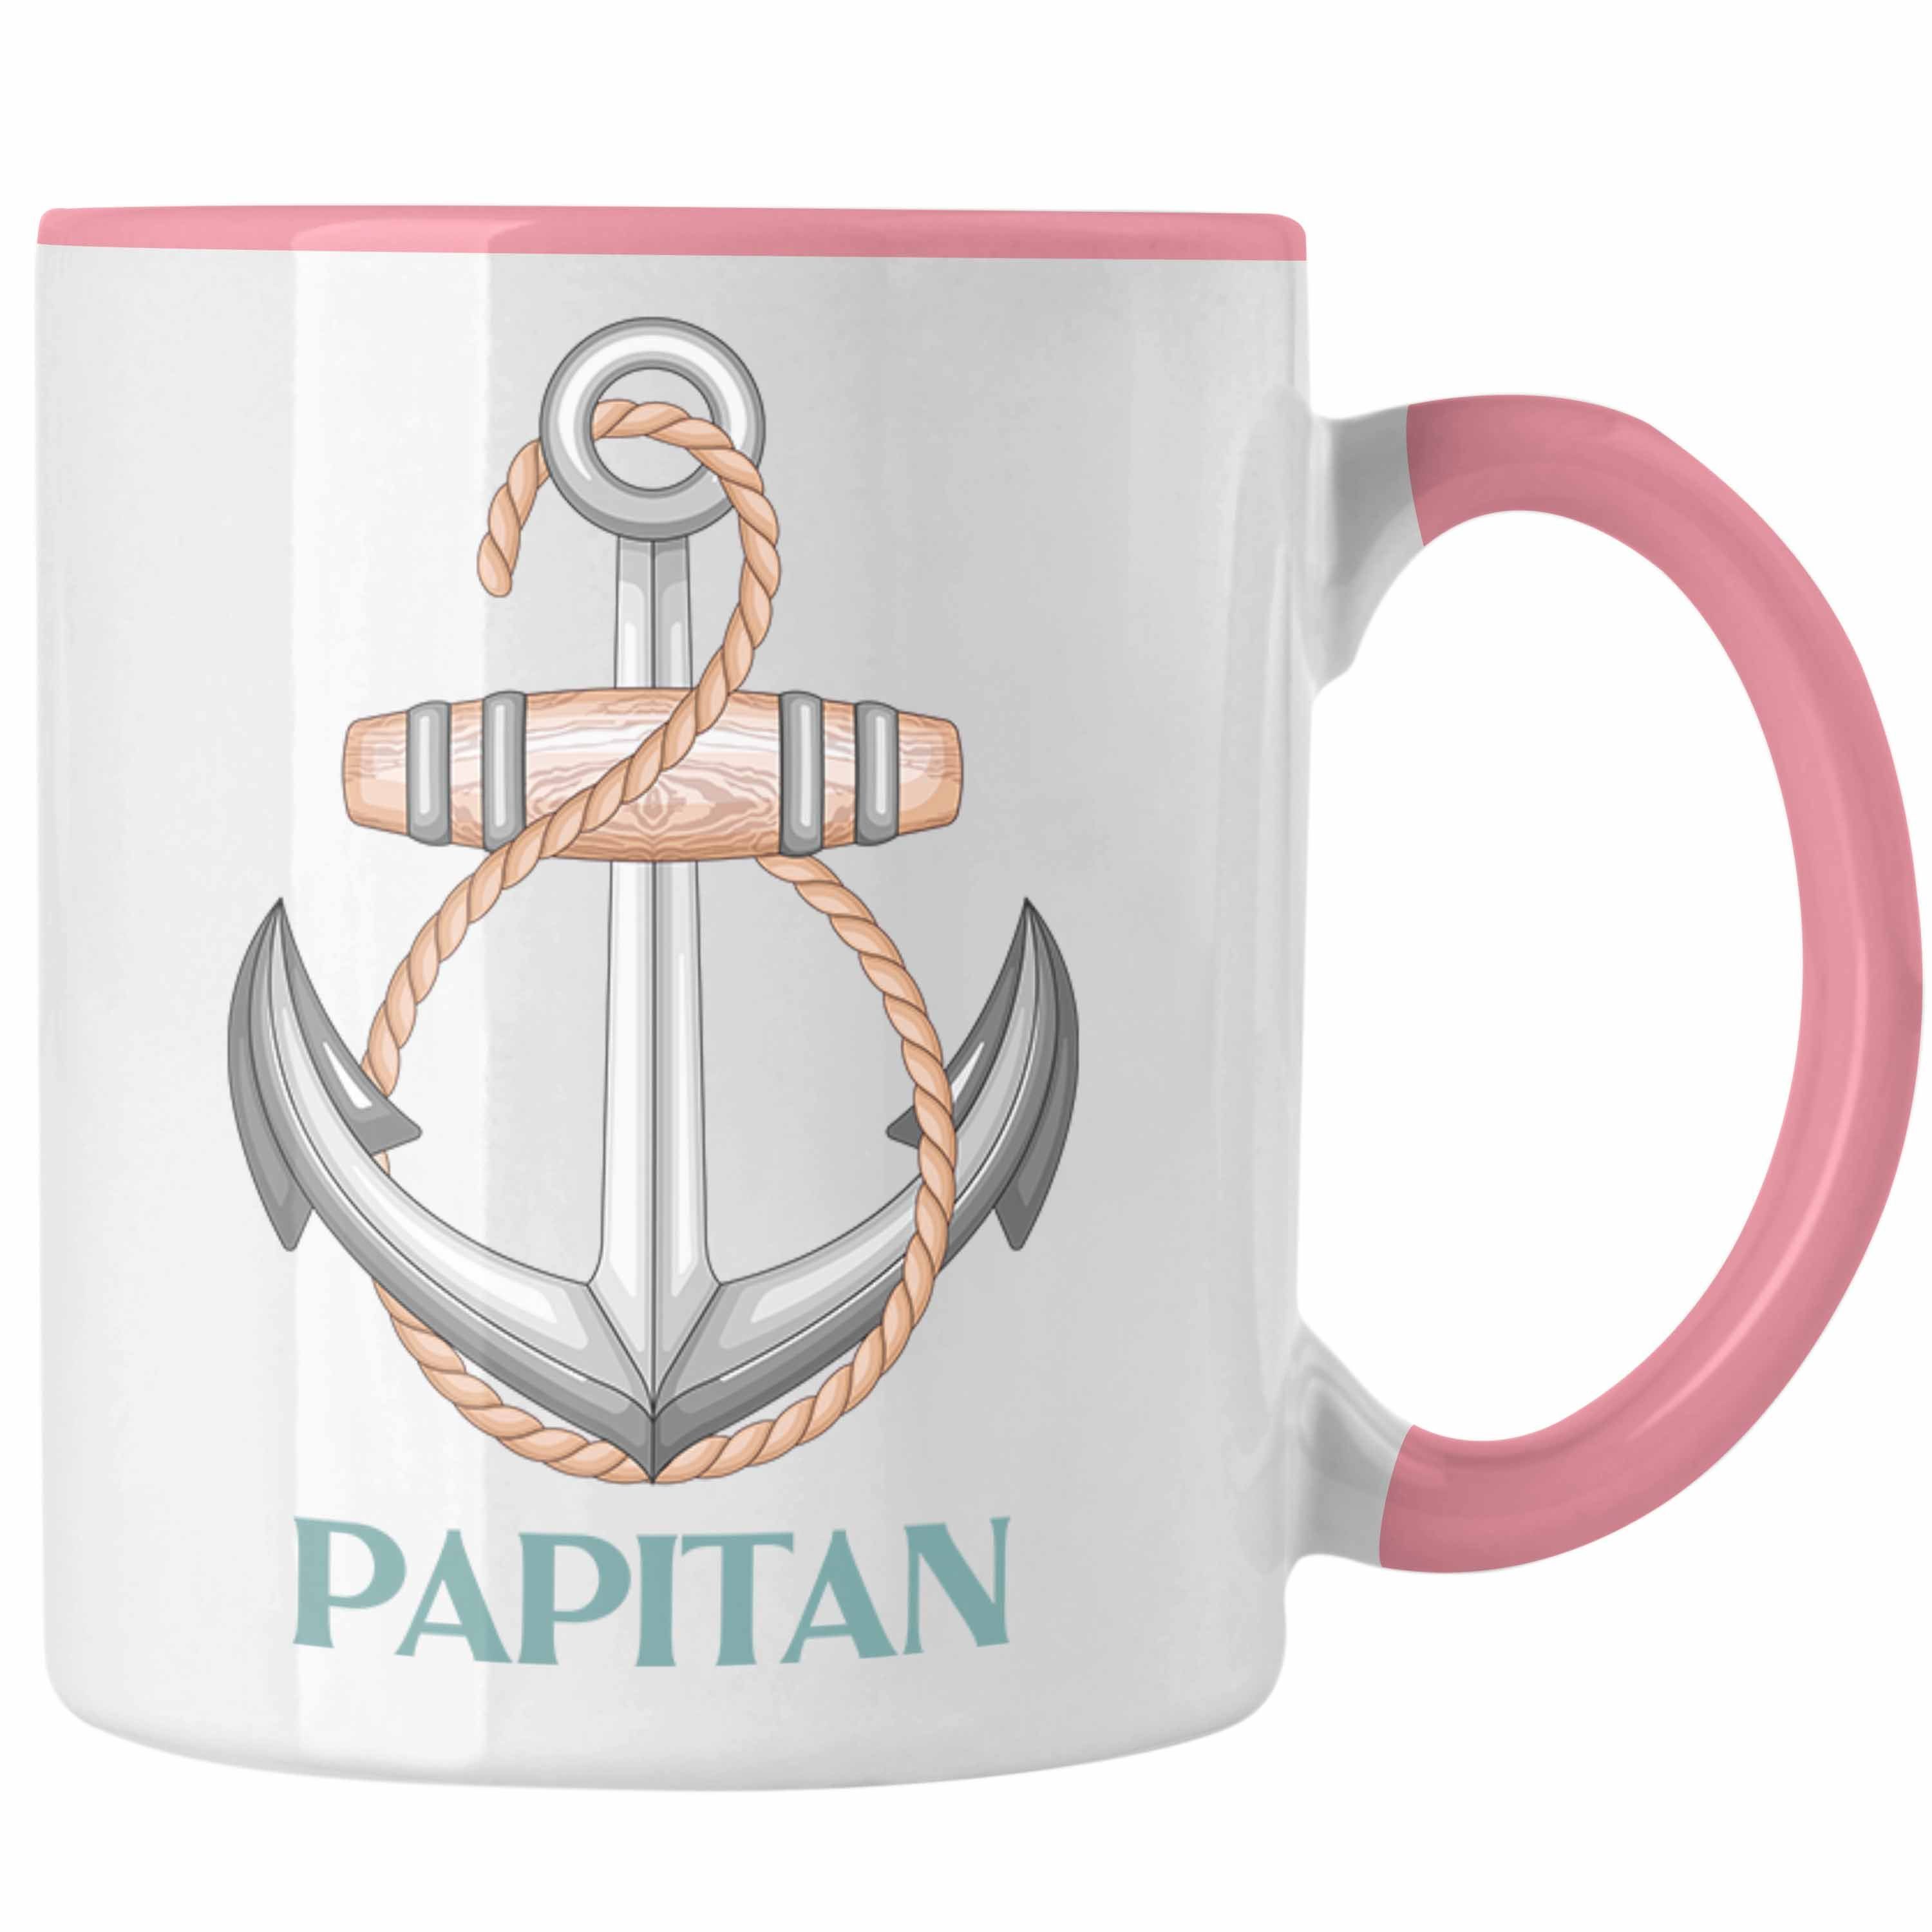 Trendation Tasse Kapitän Tasse Geschenk für Papa Vater Papitän Geschenkidee zum Vaterta Rosa | Teetassen